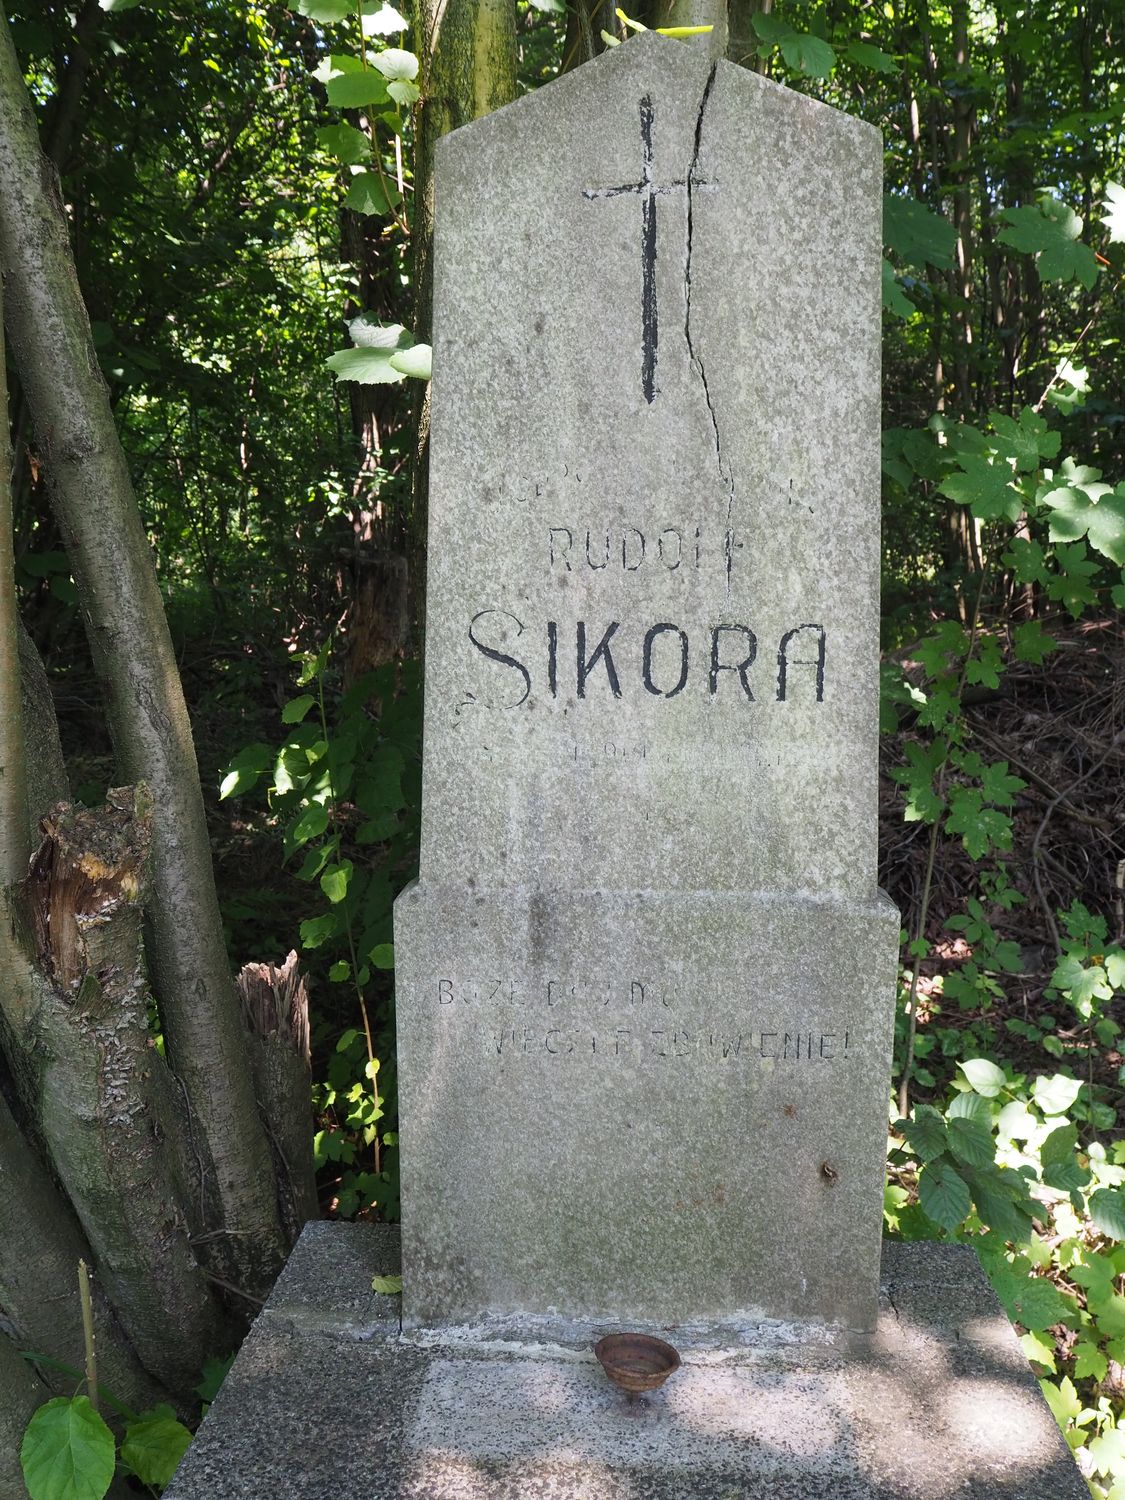 Fragment of Rudolf Sikora's tombstone, Karviná Mexico cemetery, as of 2022.